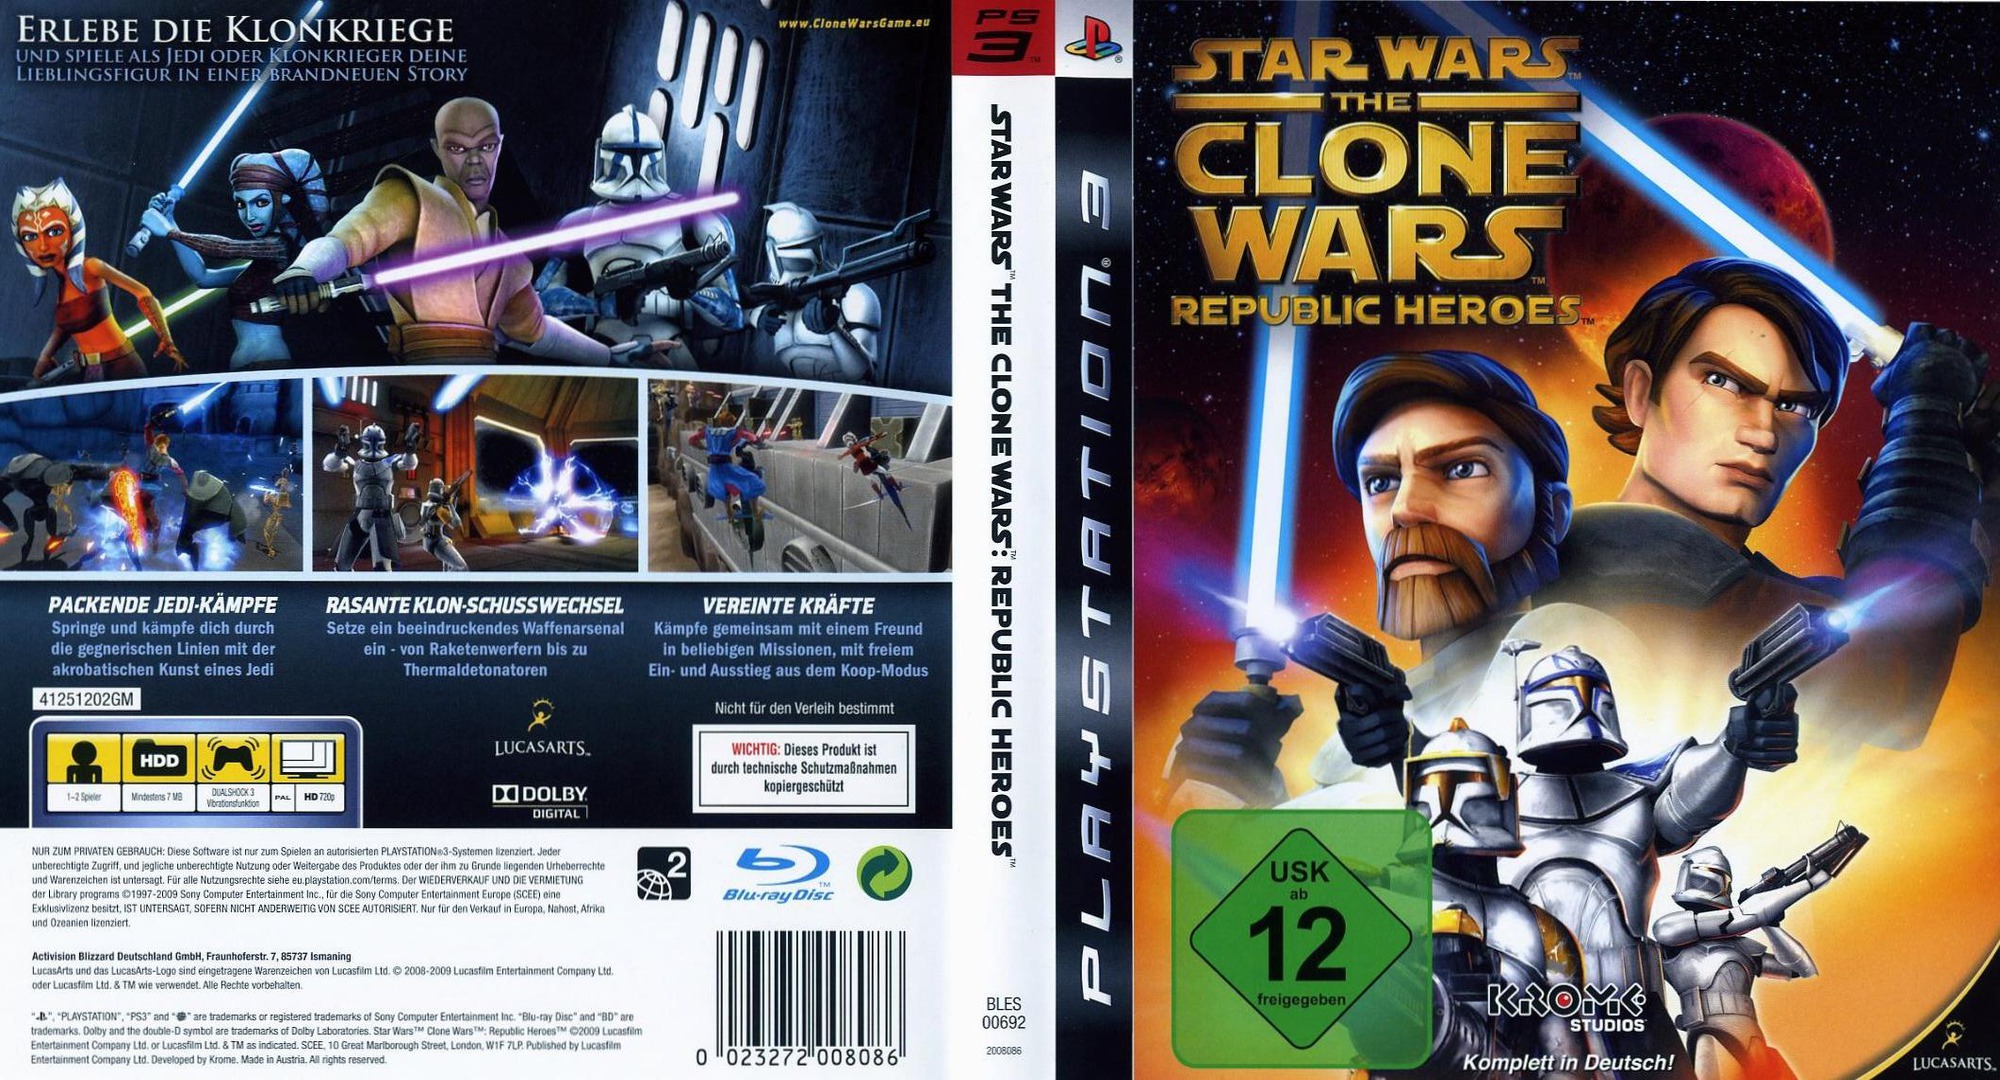 Star Wars: The Clone Wars – Republic Heroes #21